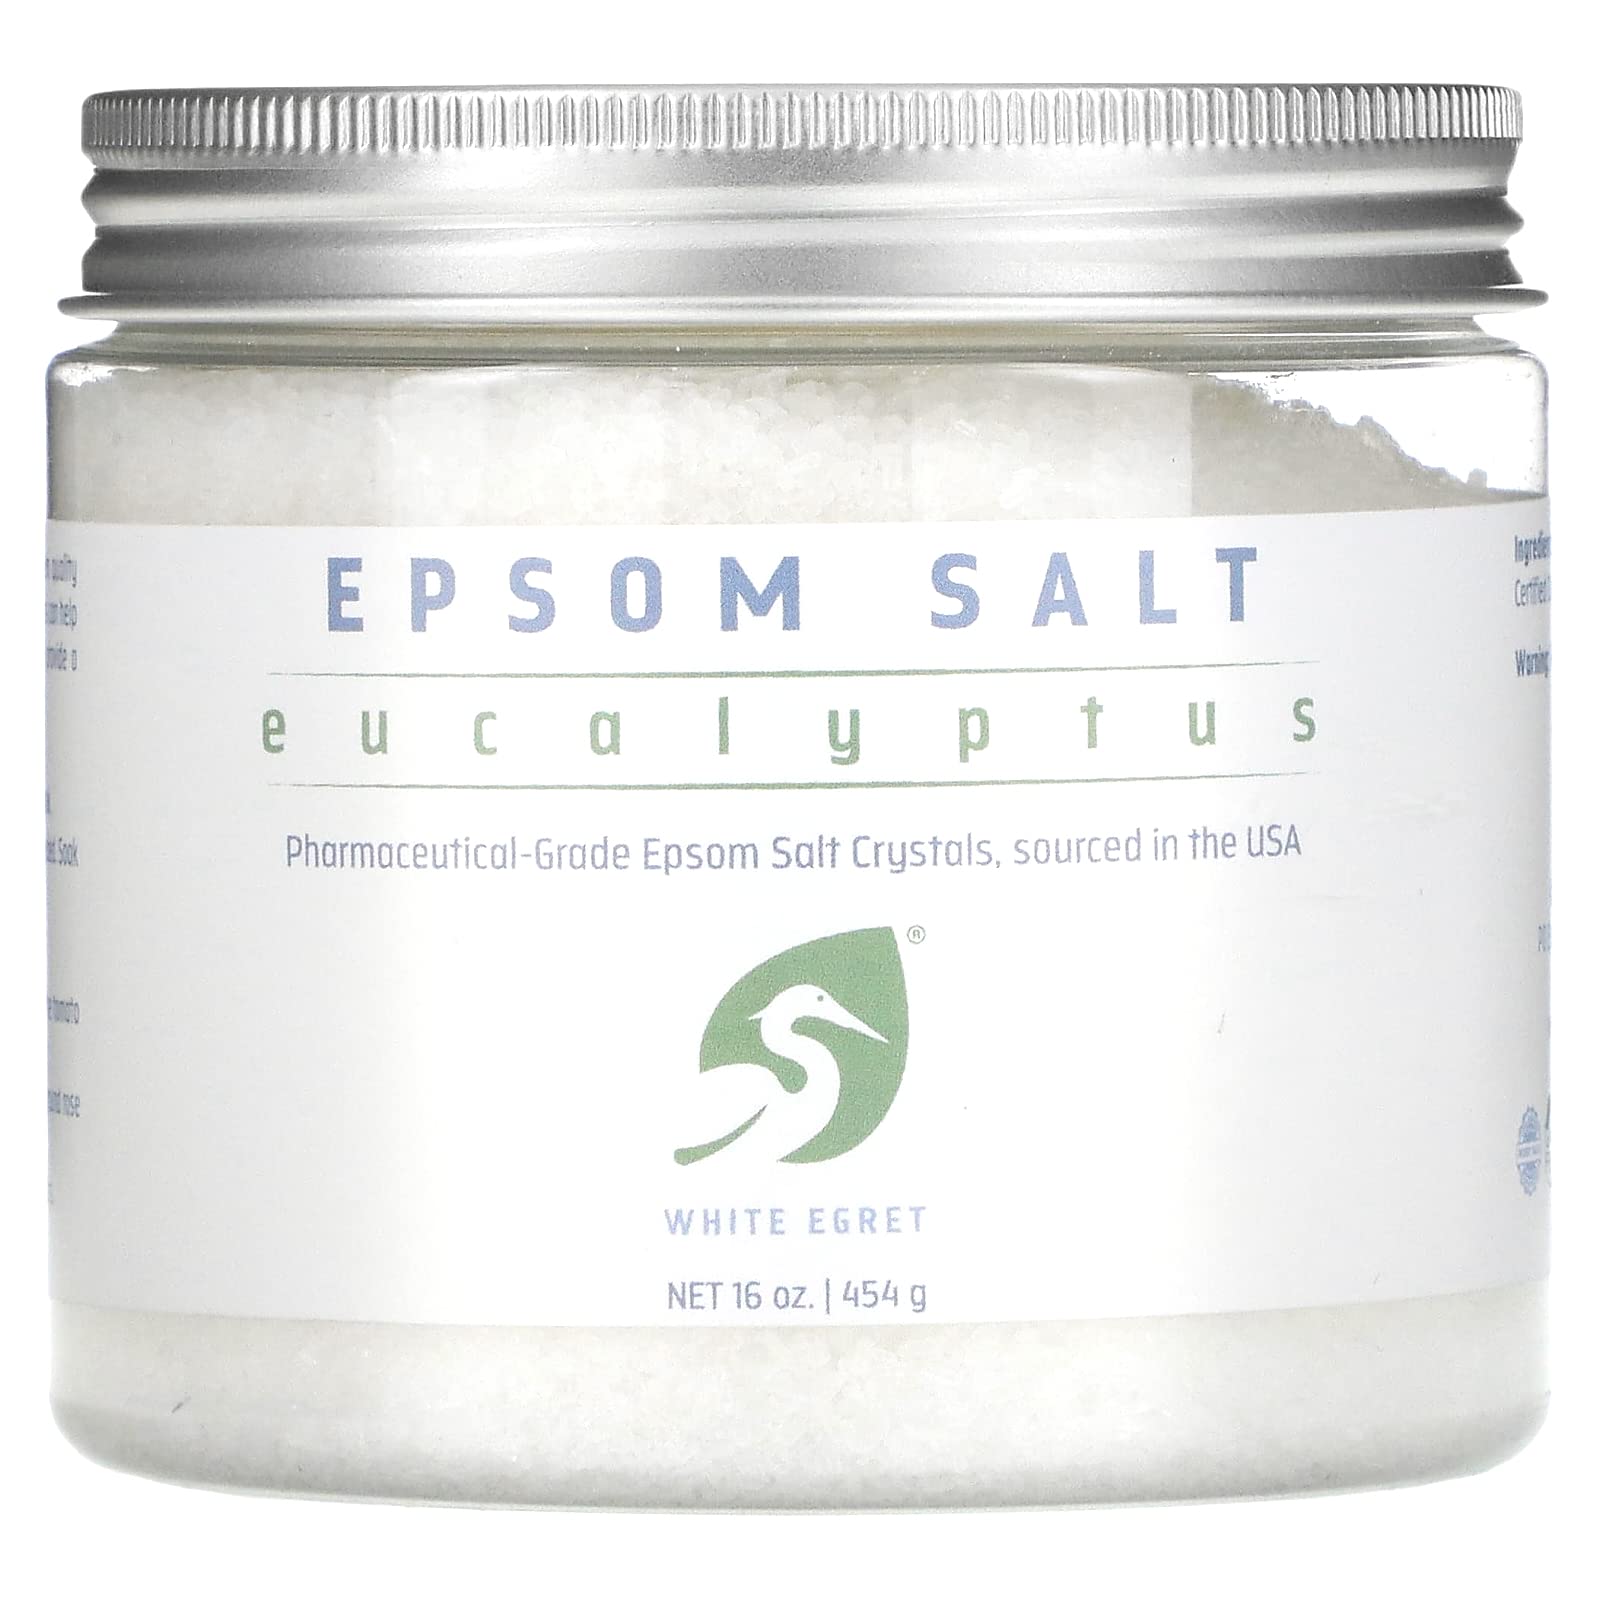 WHITE EGRET Epsom Salt, Eucalyptus, 2.5 Pound